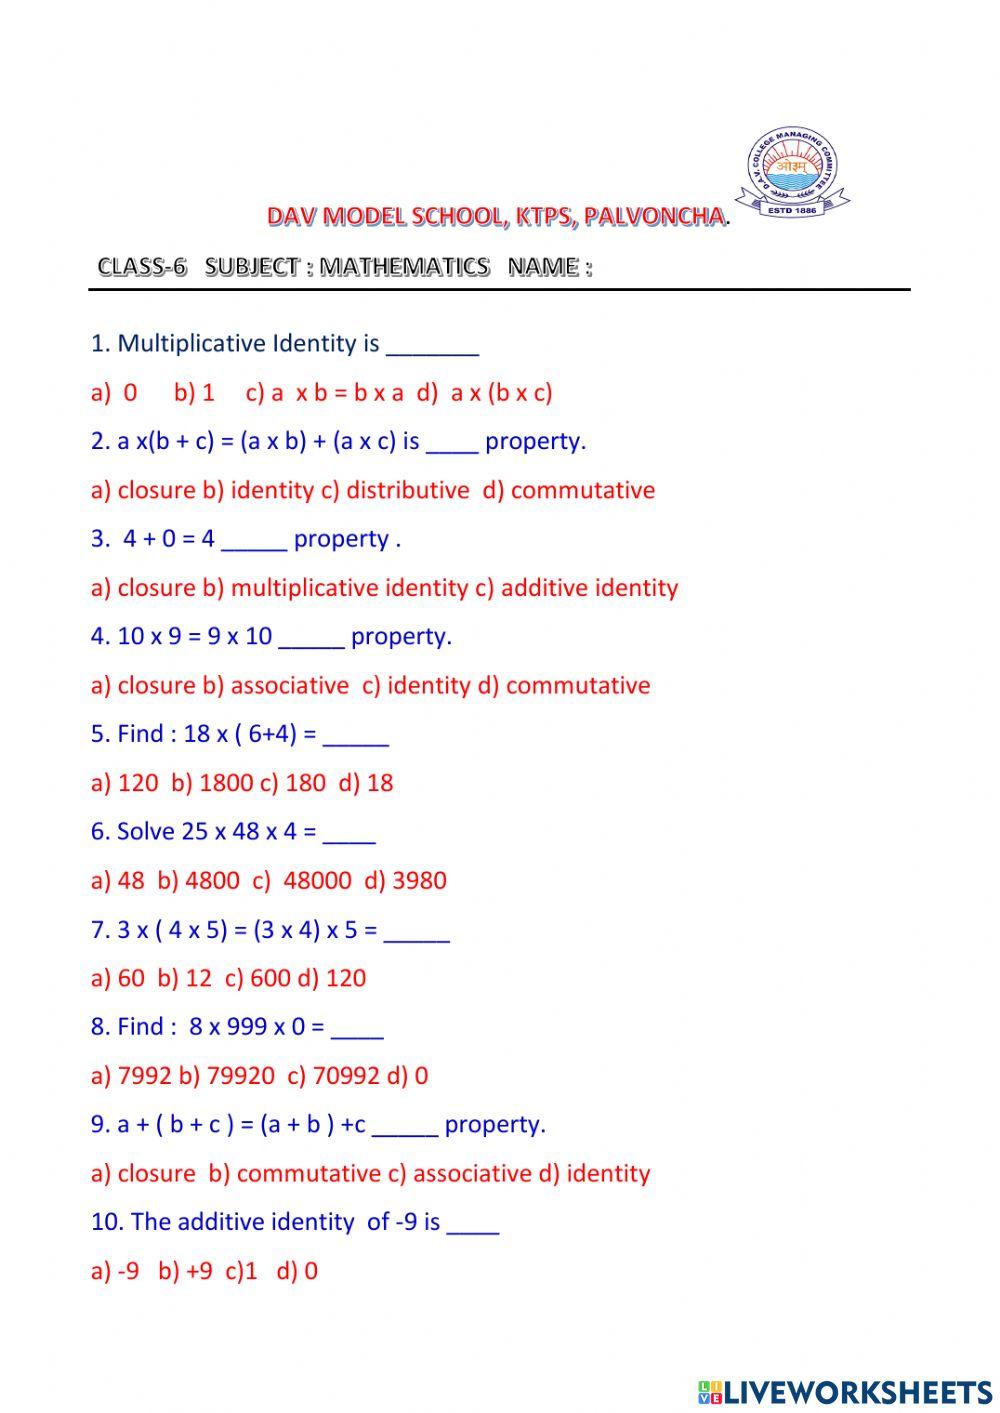 Class-6 properties